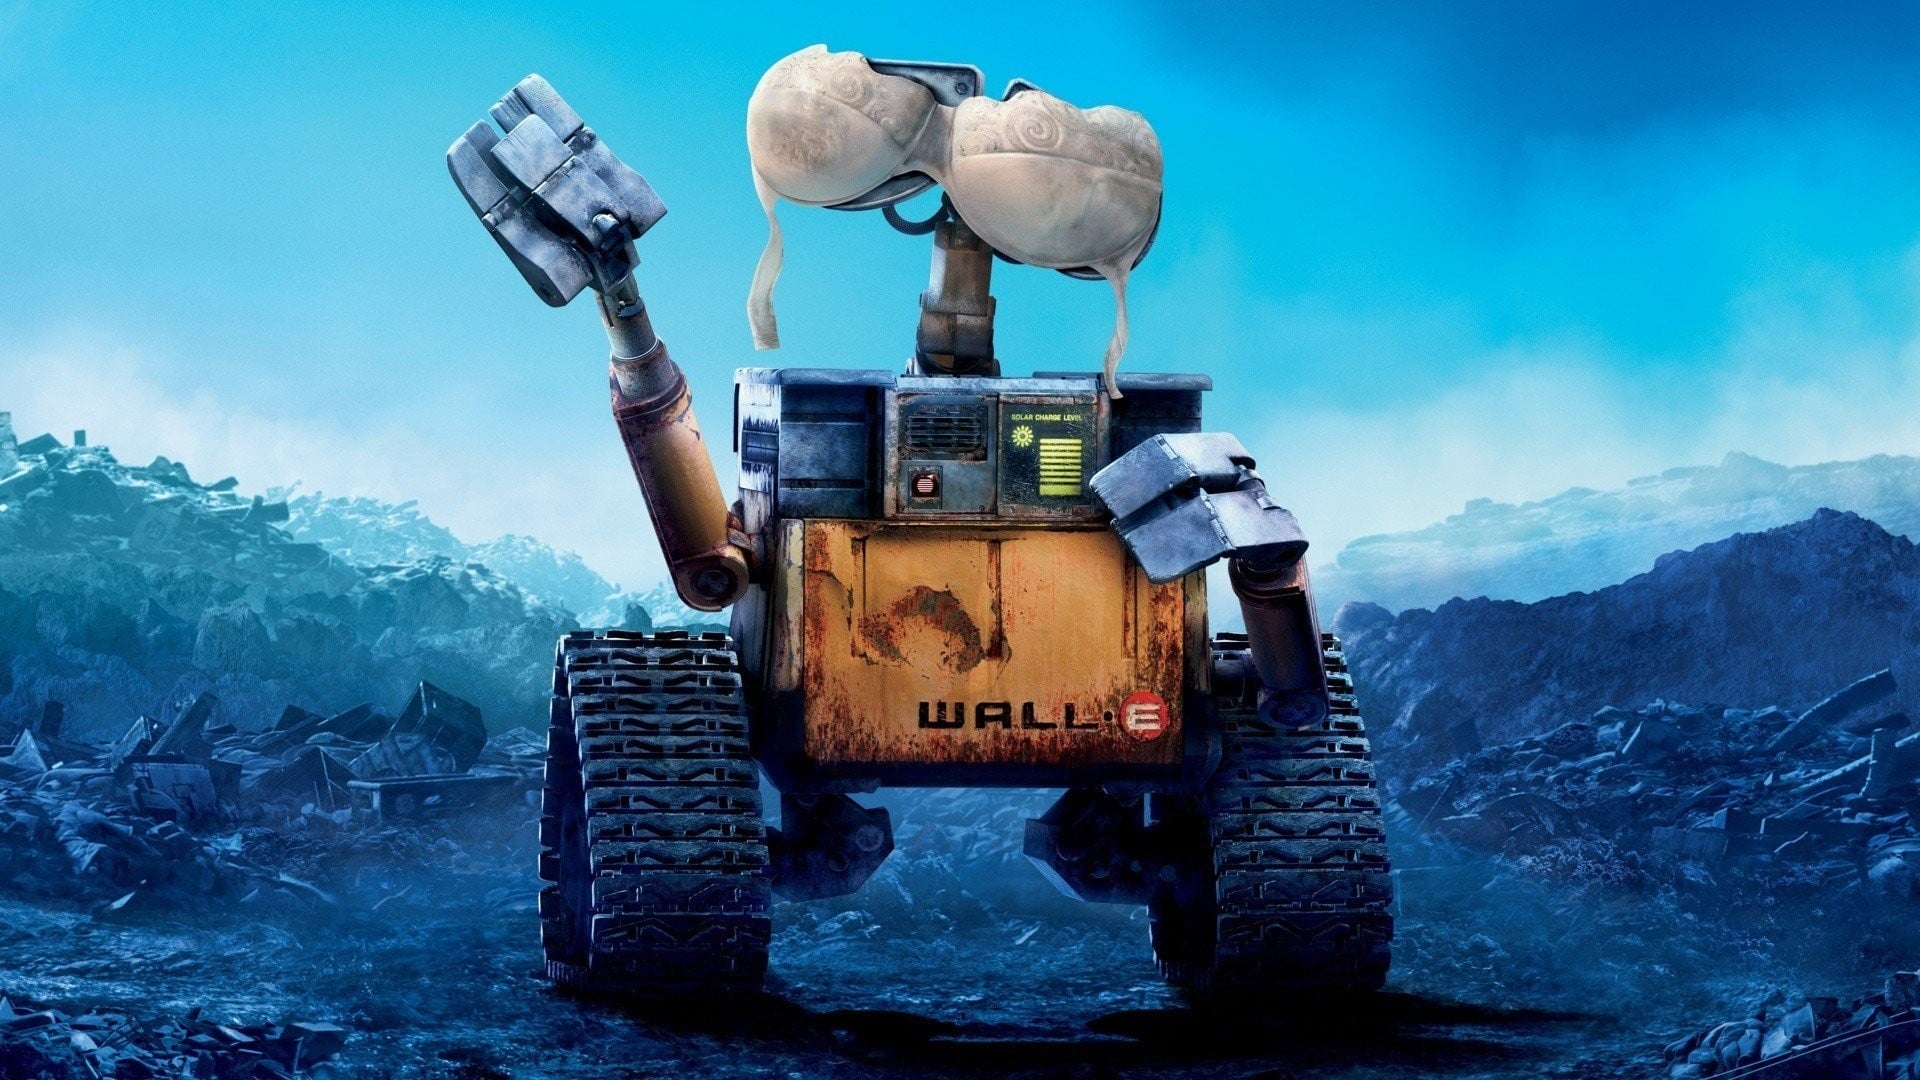 Image du film Wall-E mzwp8hkj5nbrqwbdjc76dzt36rxjpg